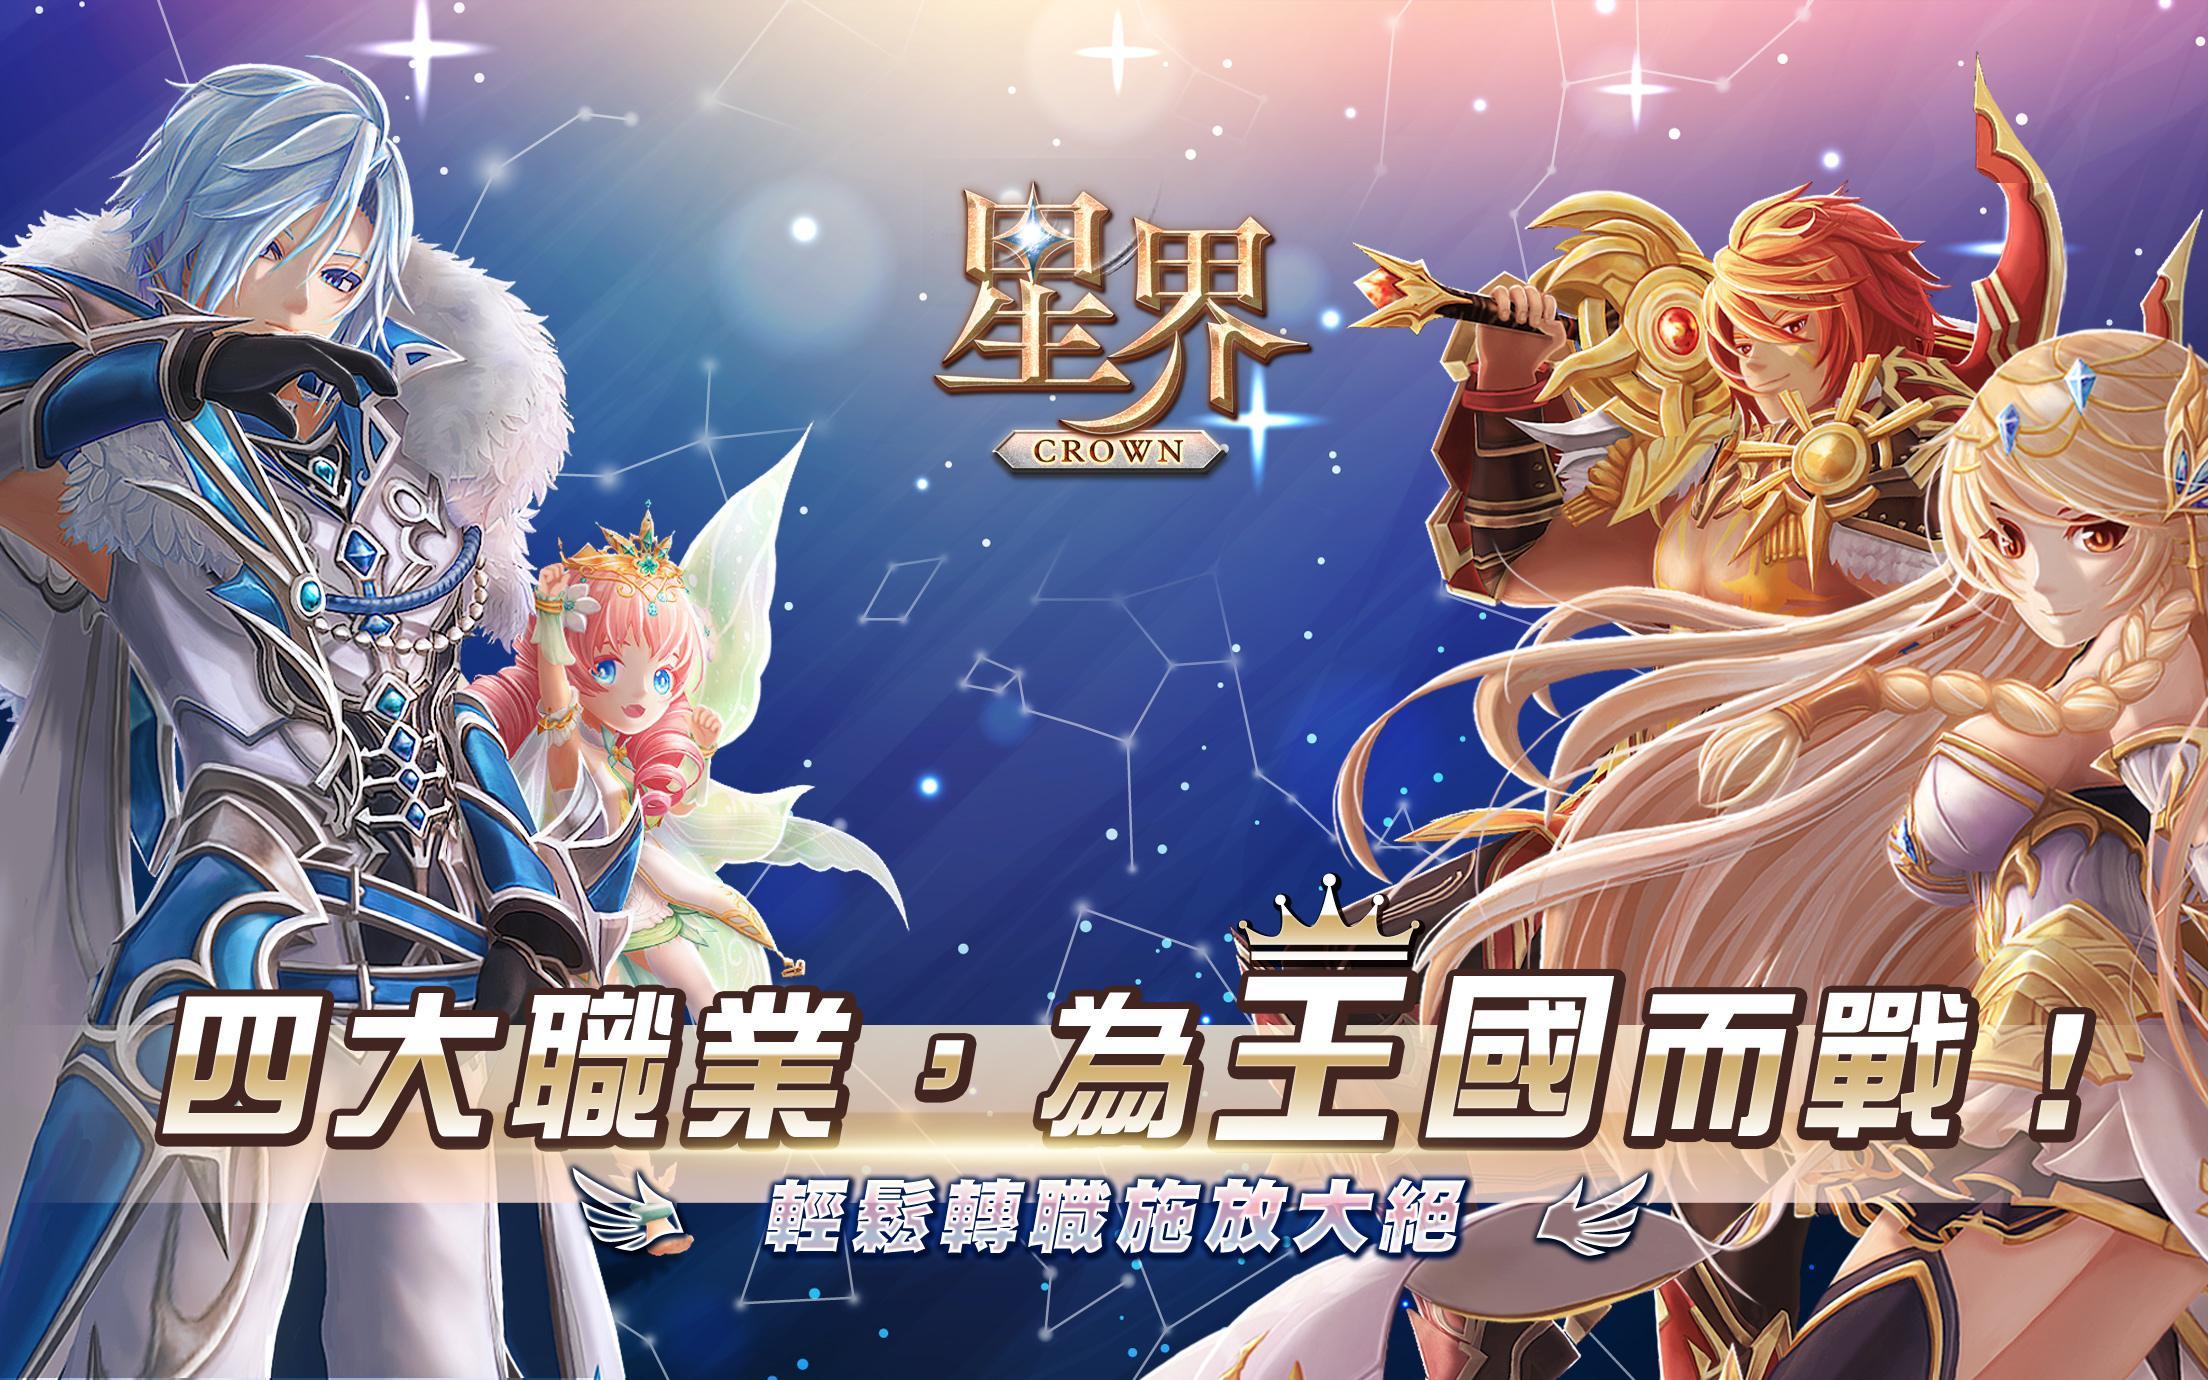 Banner of Astral: The Crown (versión de Hong Kong y Macao) 11.0.1